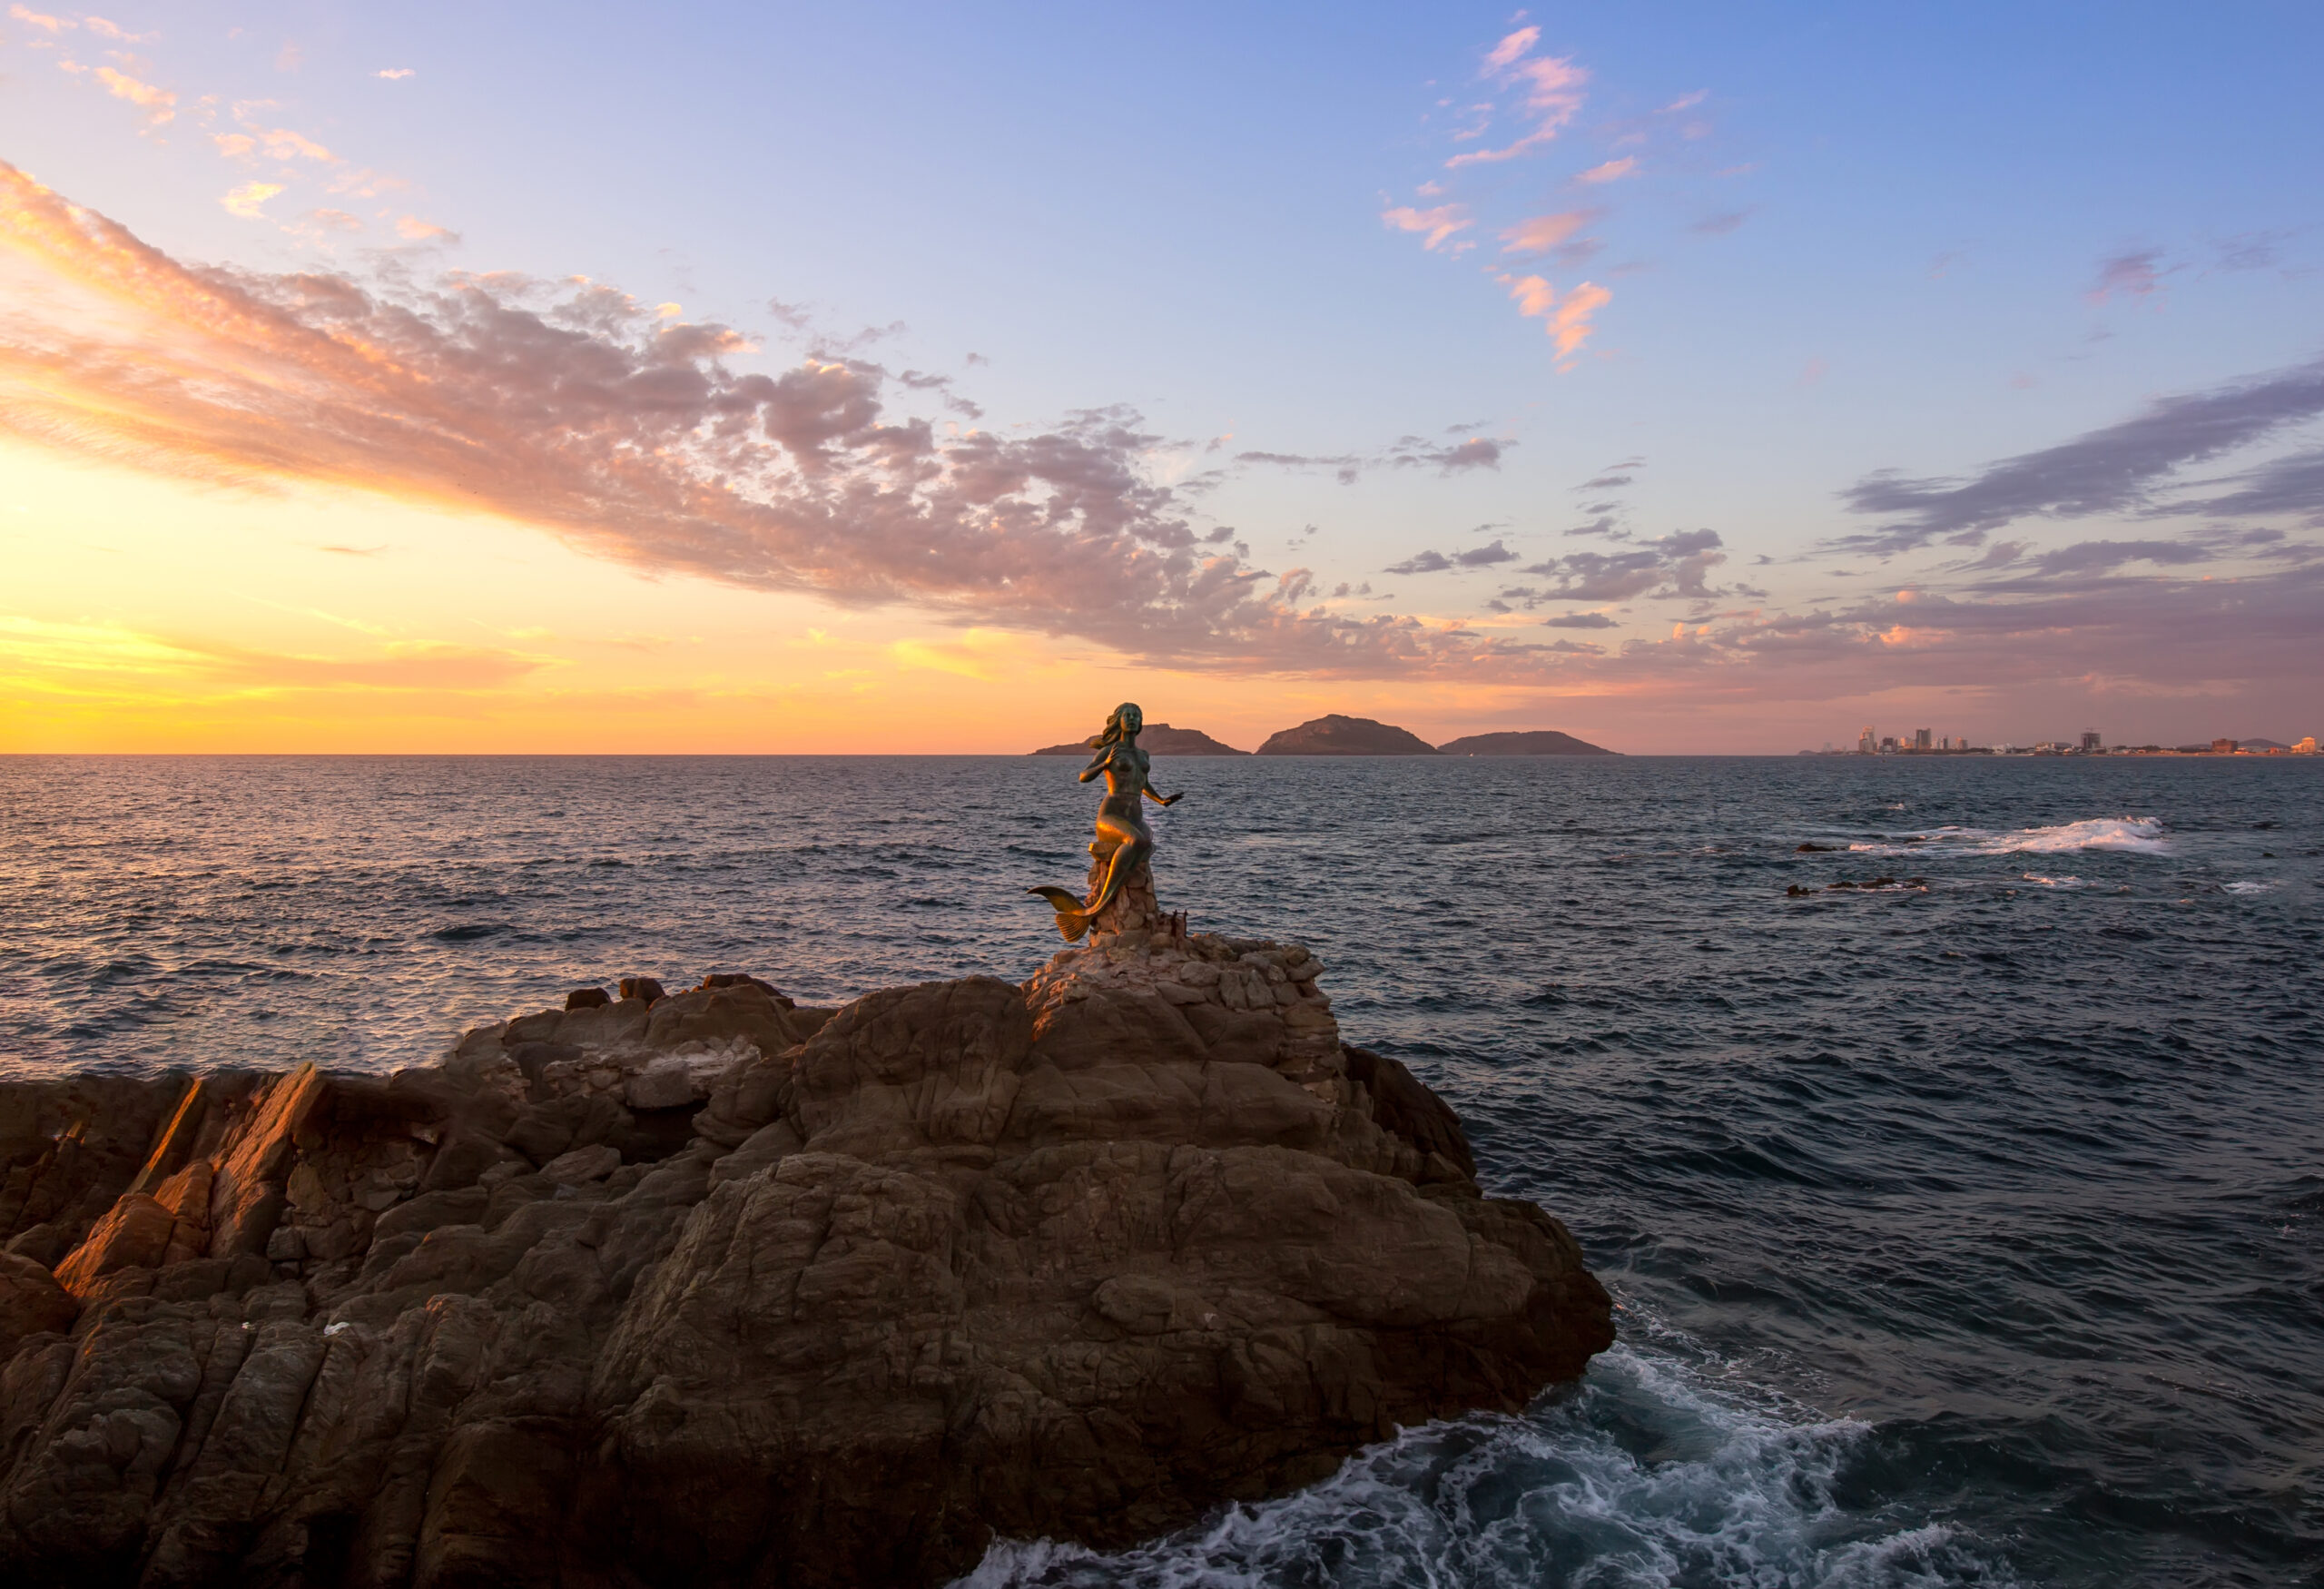 Mexico, Mazatlan sea promenade, El Malecon, with ocean lookouts and scenic landscapes